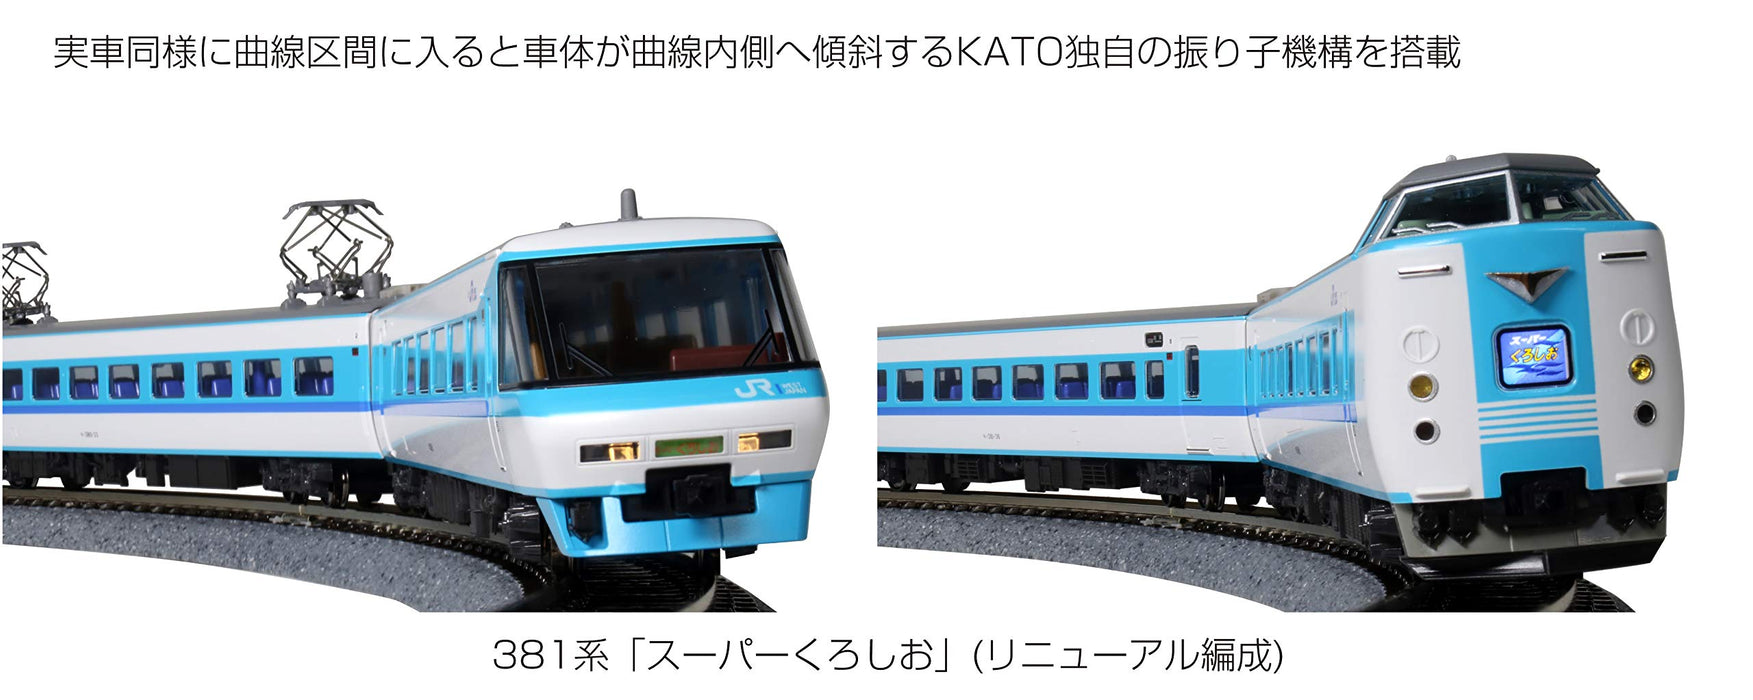 Kato 381 Series N Gauge Super Kuroshio 6-Car Basic Set 10-1641 Renewed